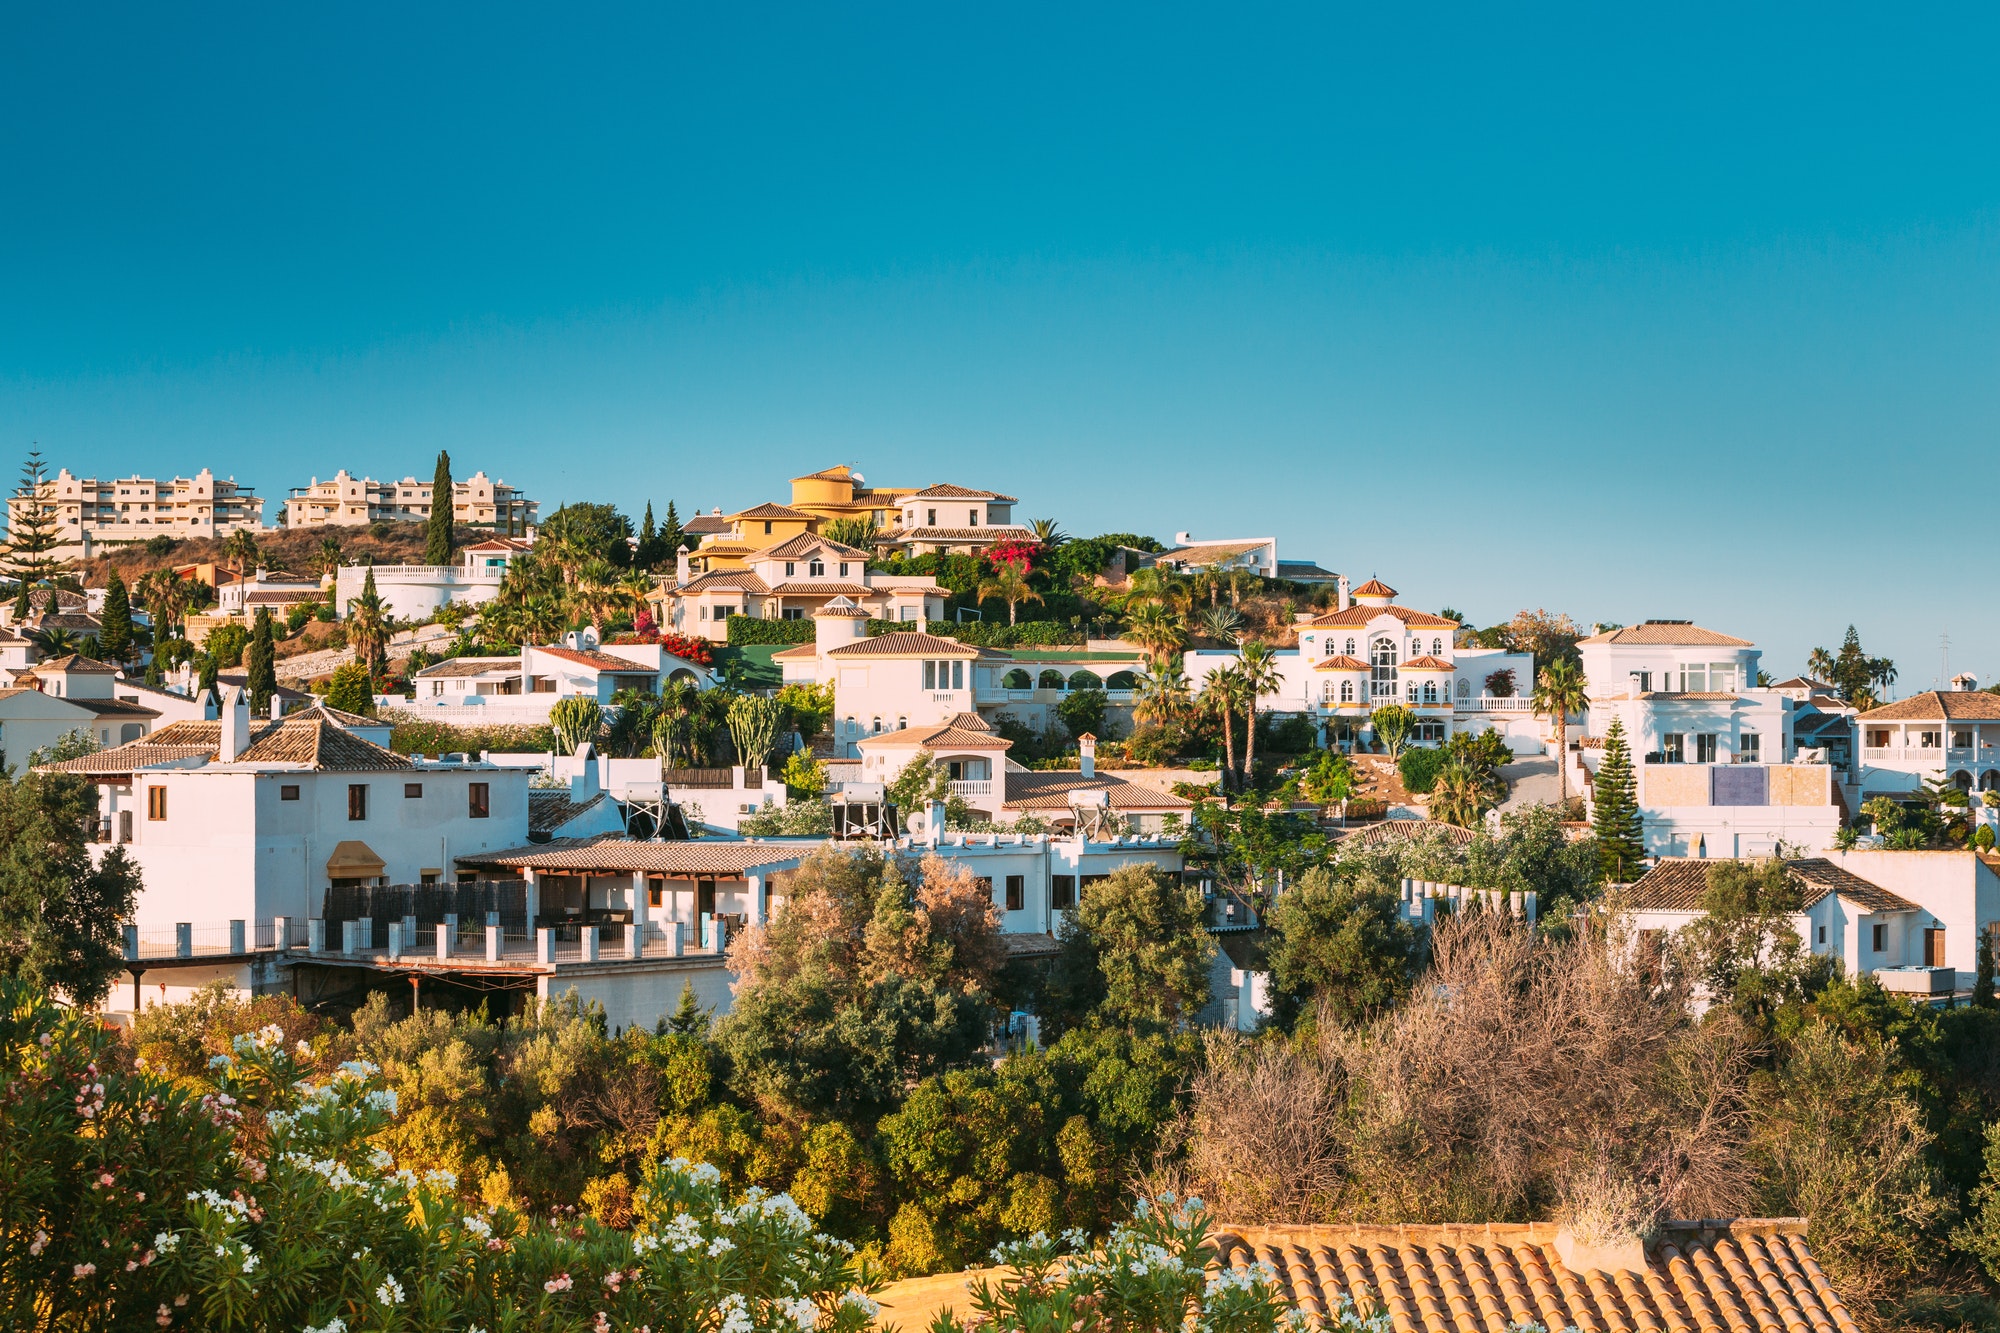 Average price per m in Andalucia is 1,642€